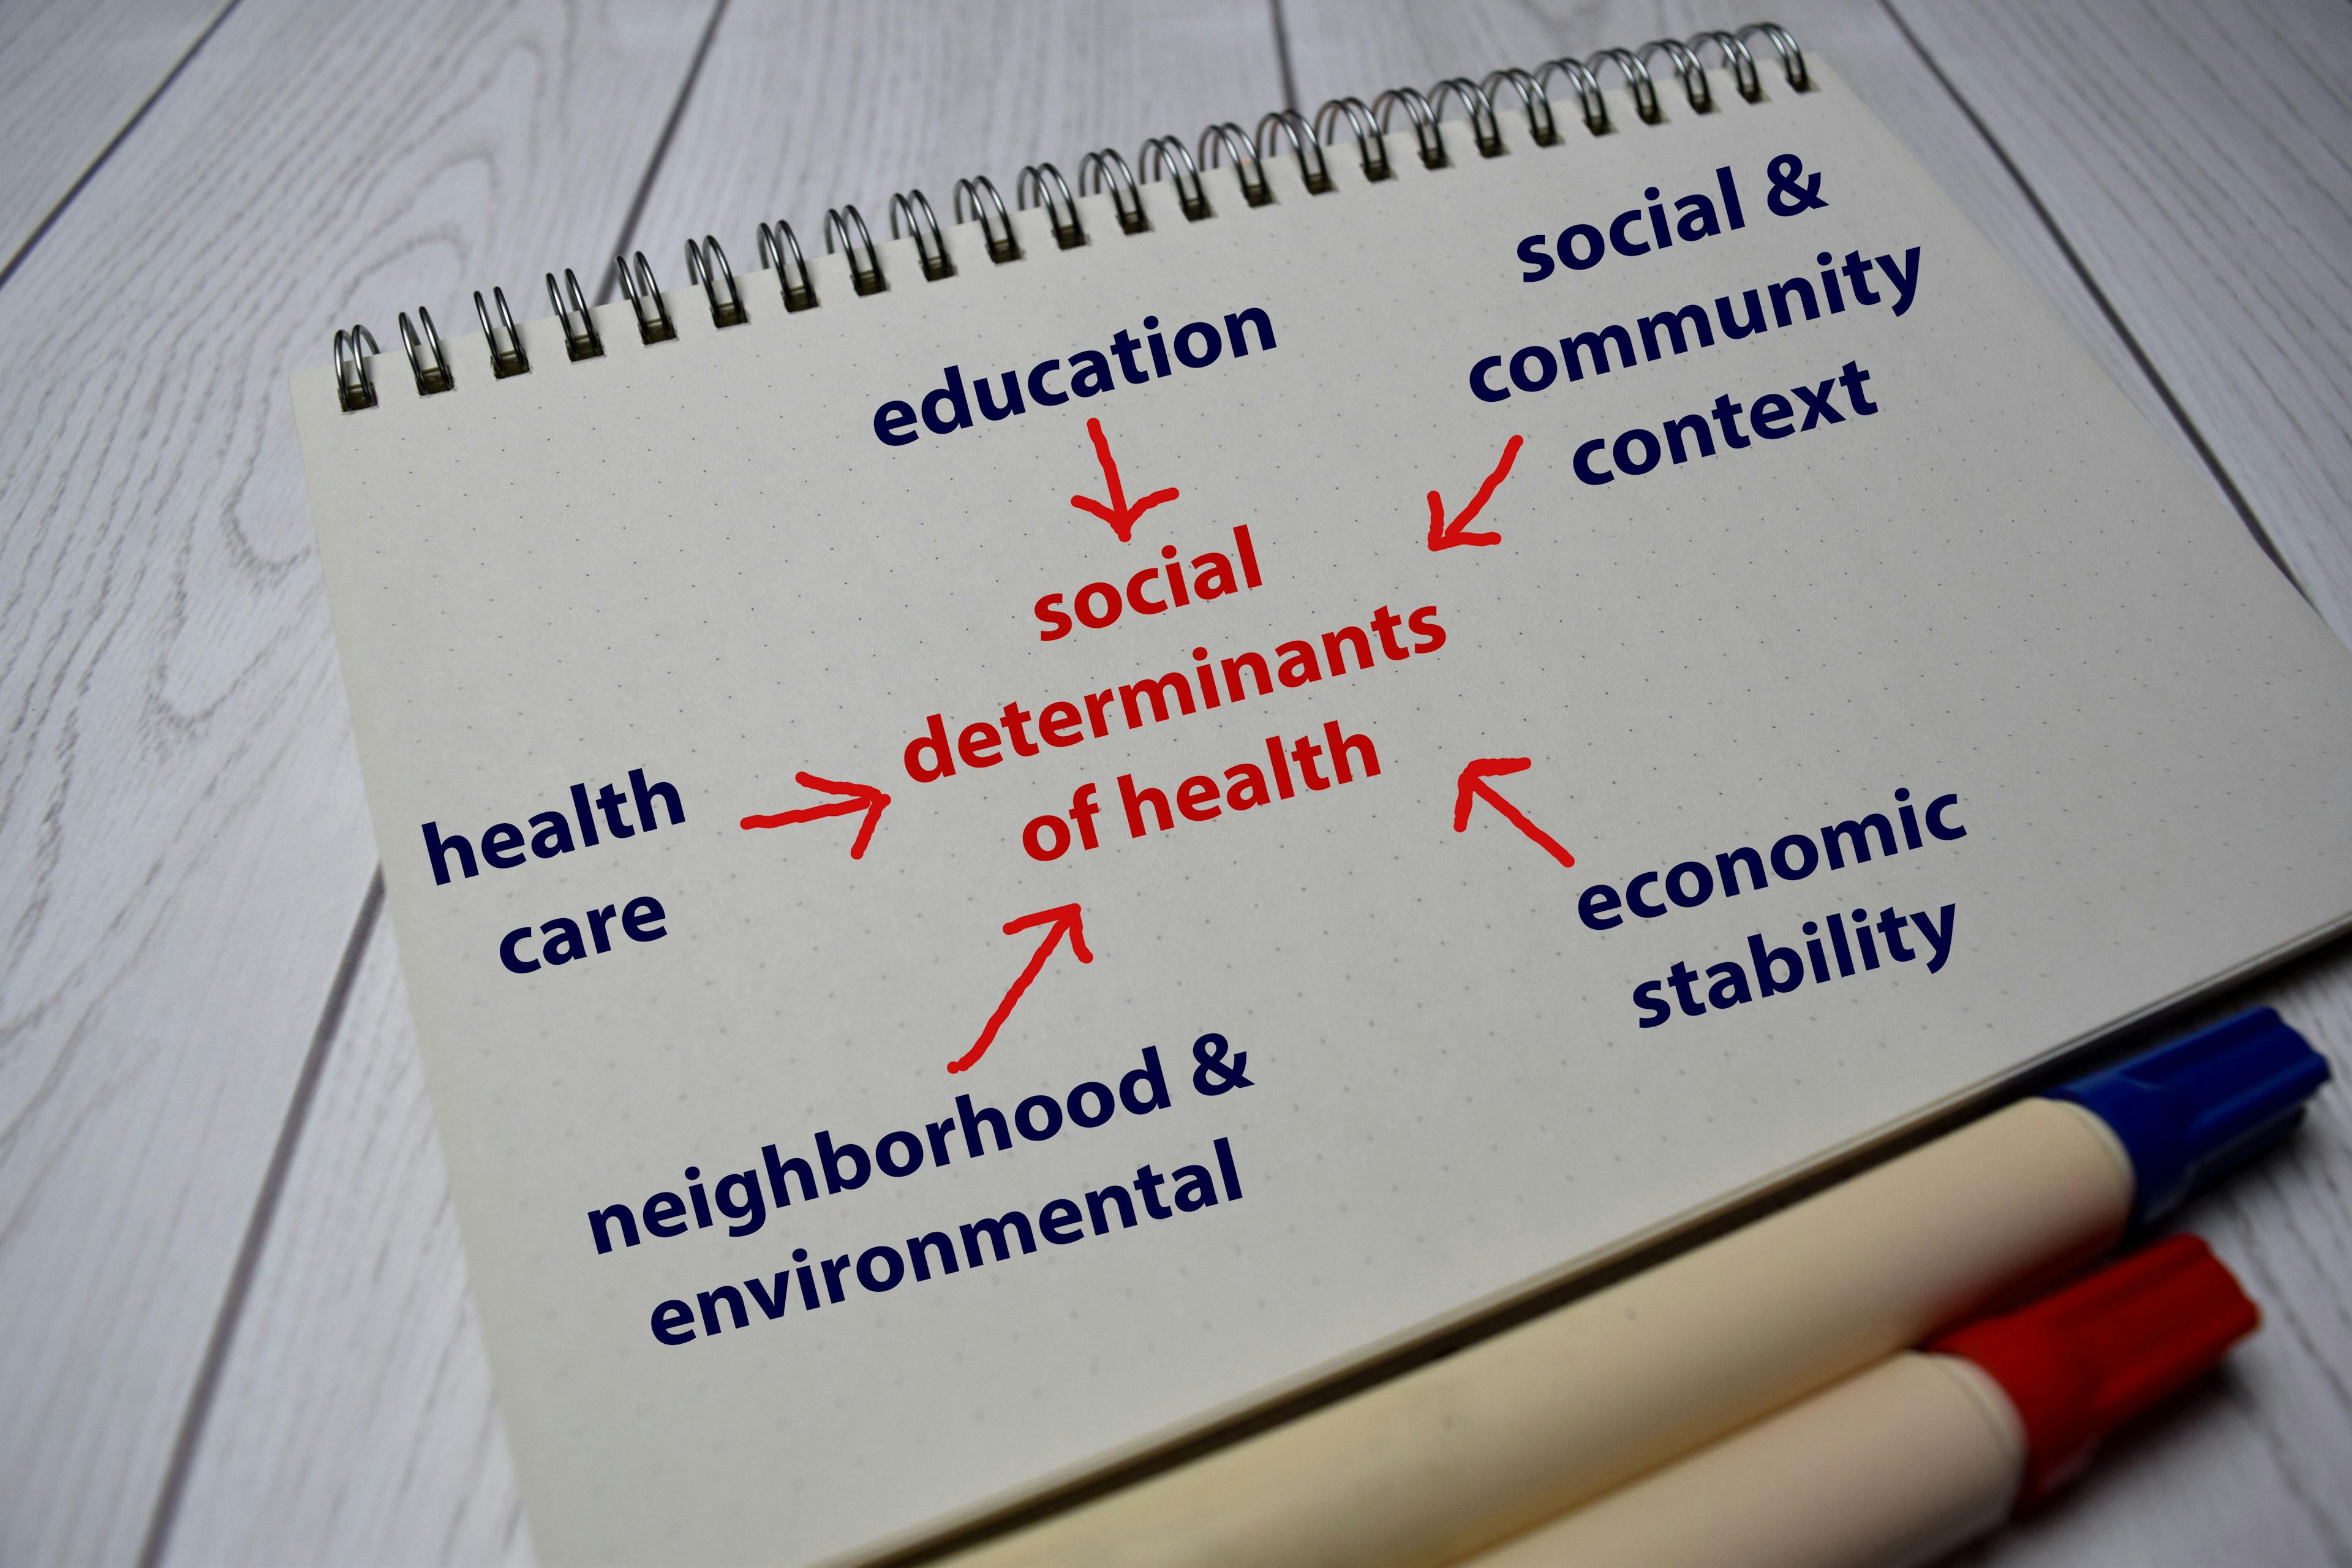 Social Determinants of Health Model | image credit: syahrir - stock.adobe.com